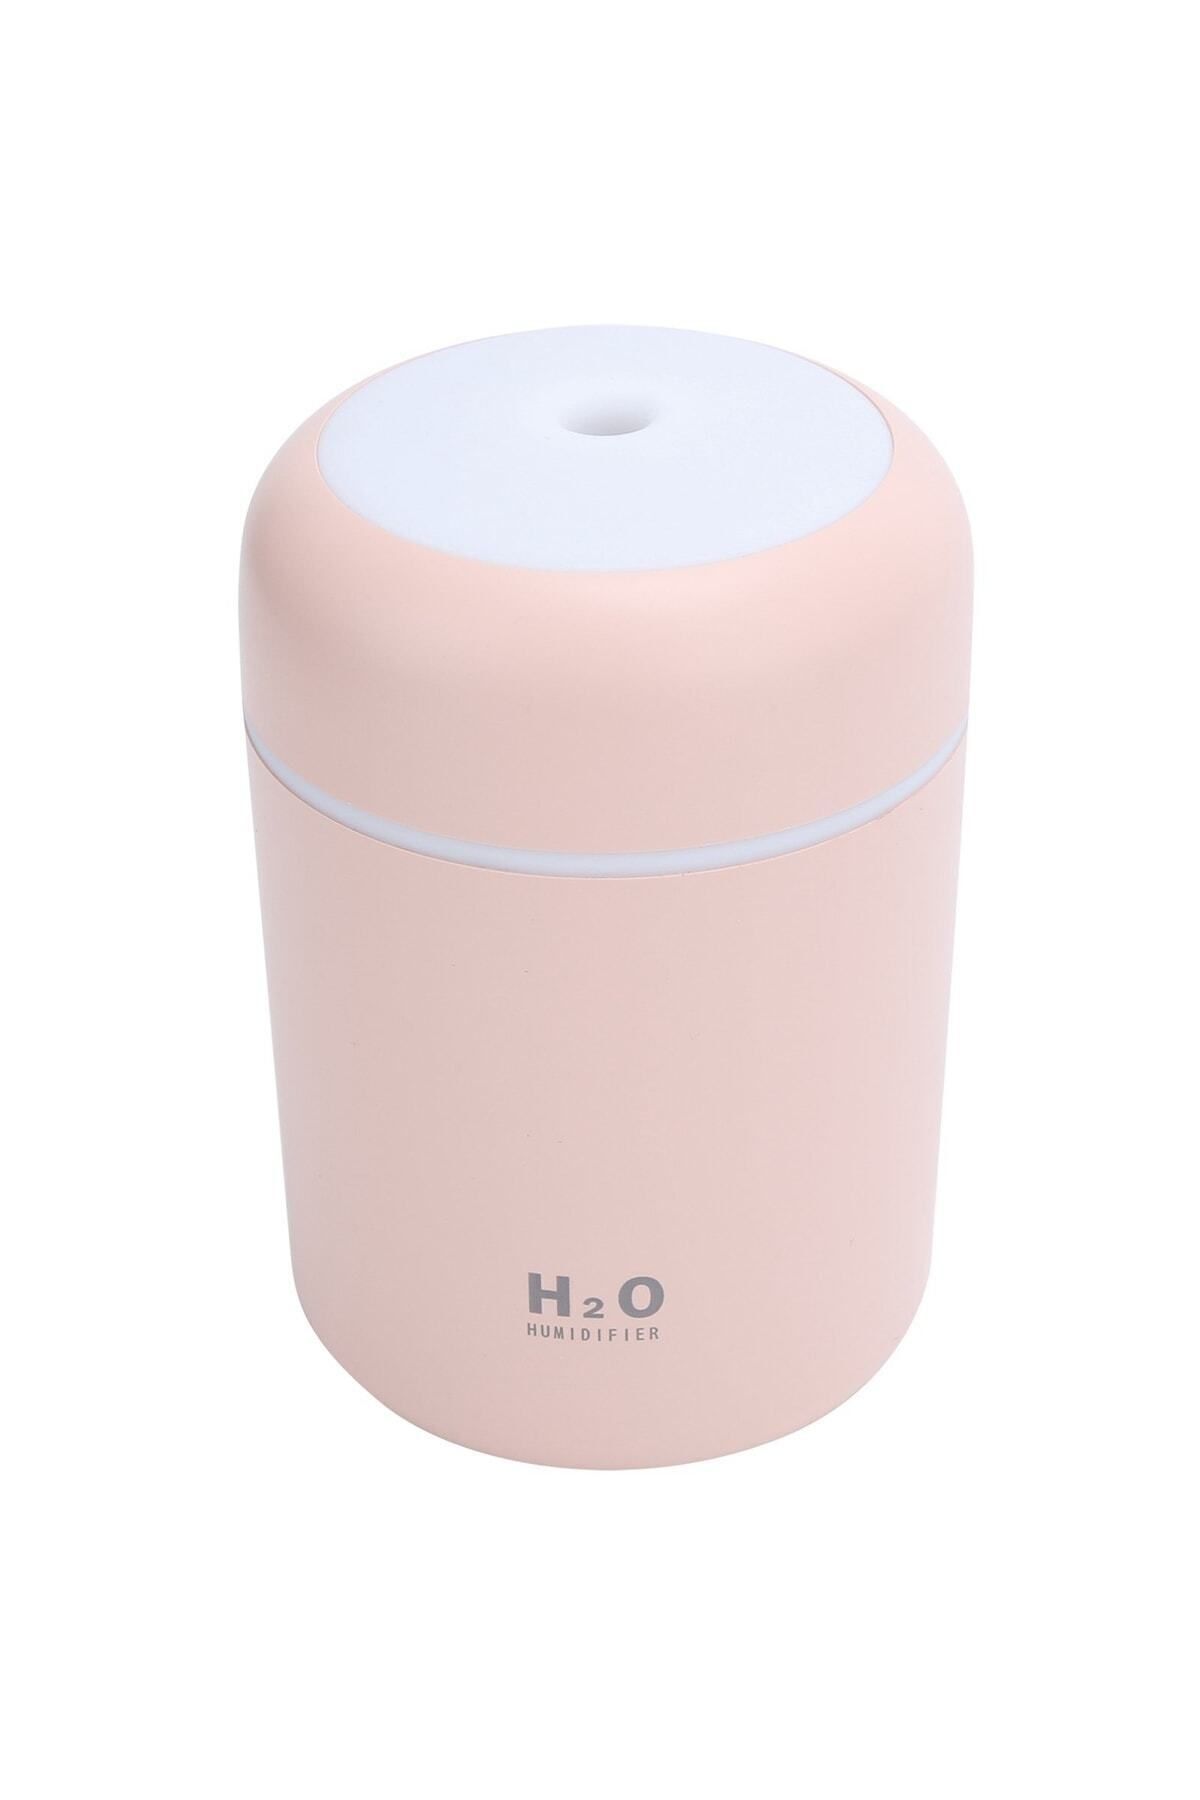 H2O Humidifier Demirkol Store Hava, Oda, Araç Nemlendirici Buhar Makinesi (pembe)